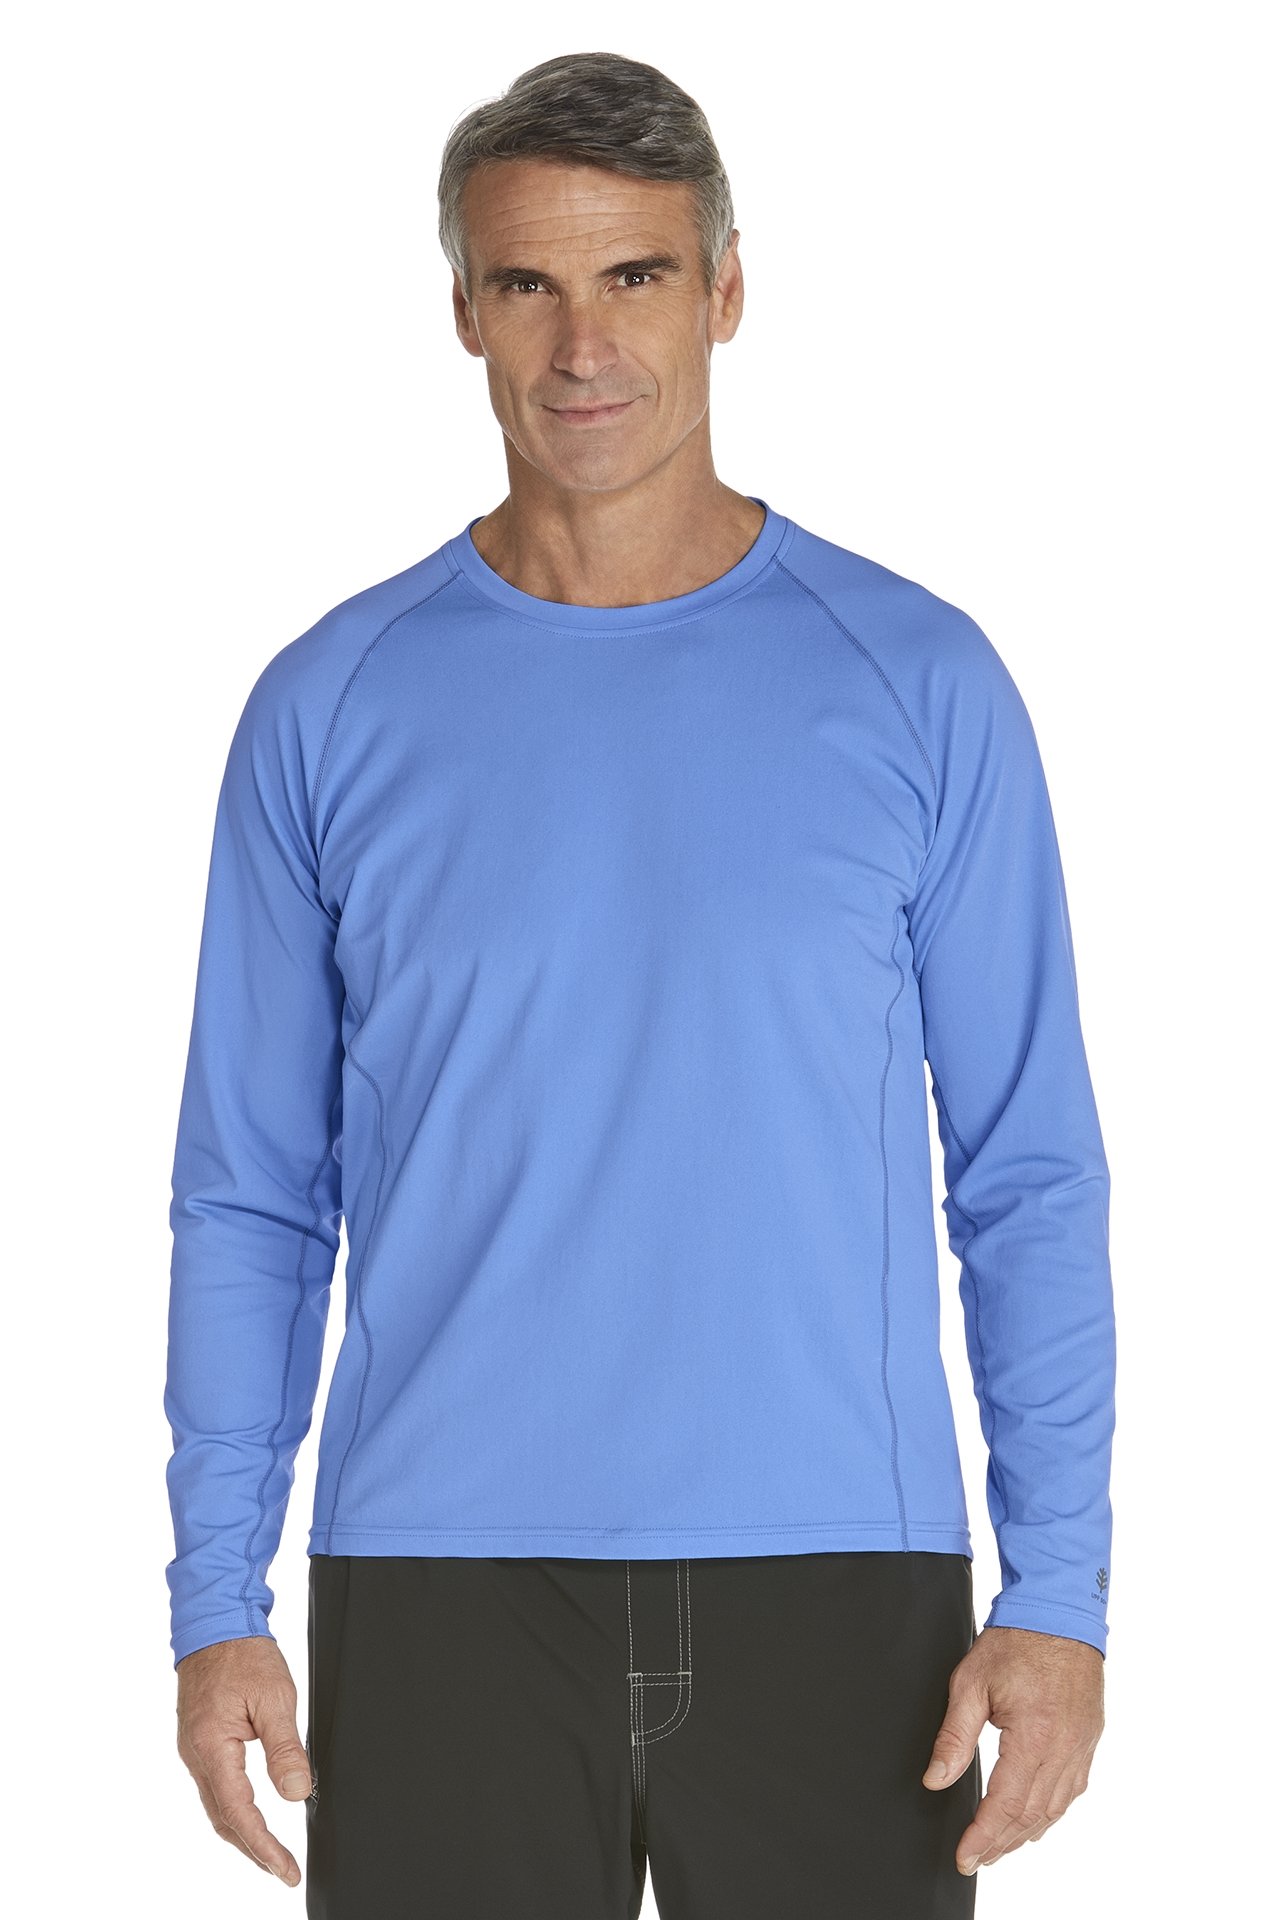 Coolibar - Men's Long-Sleeve Swim Shirts - surf blue